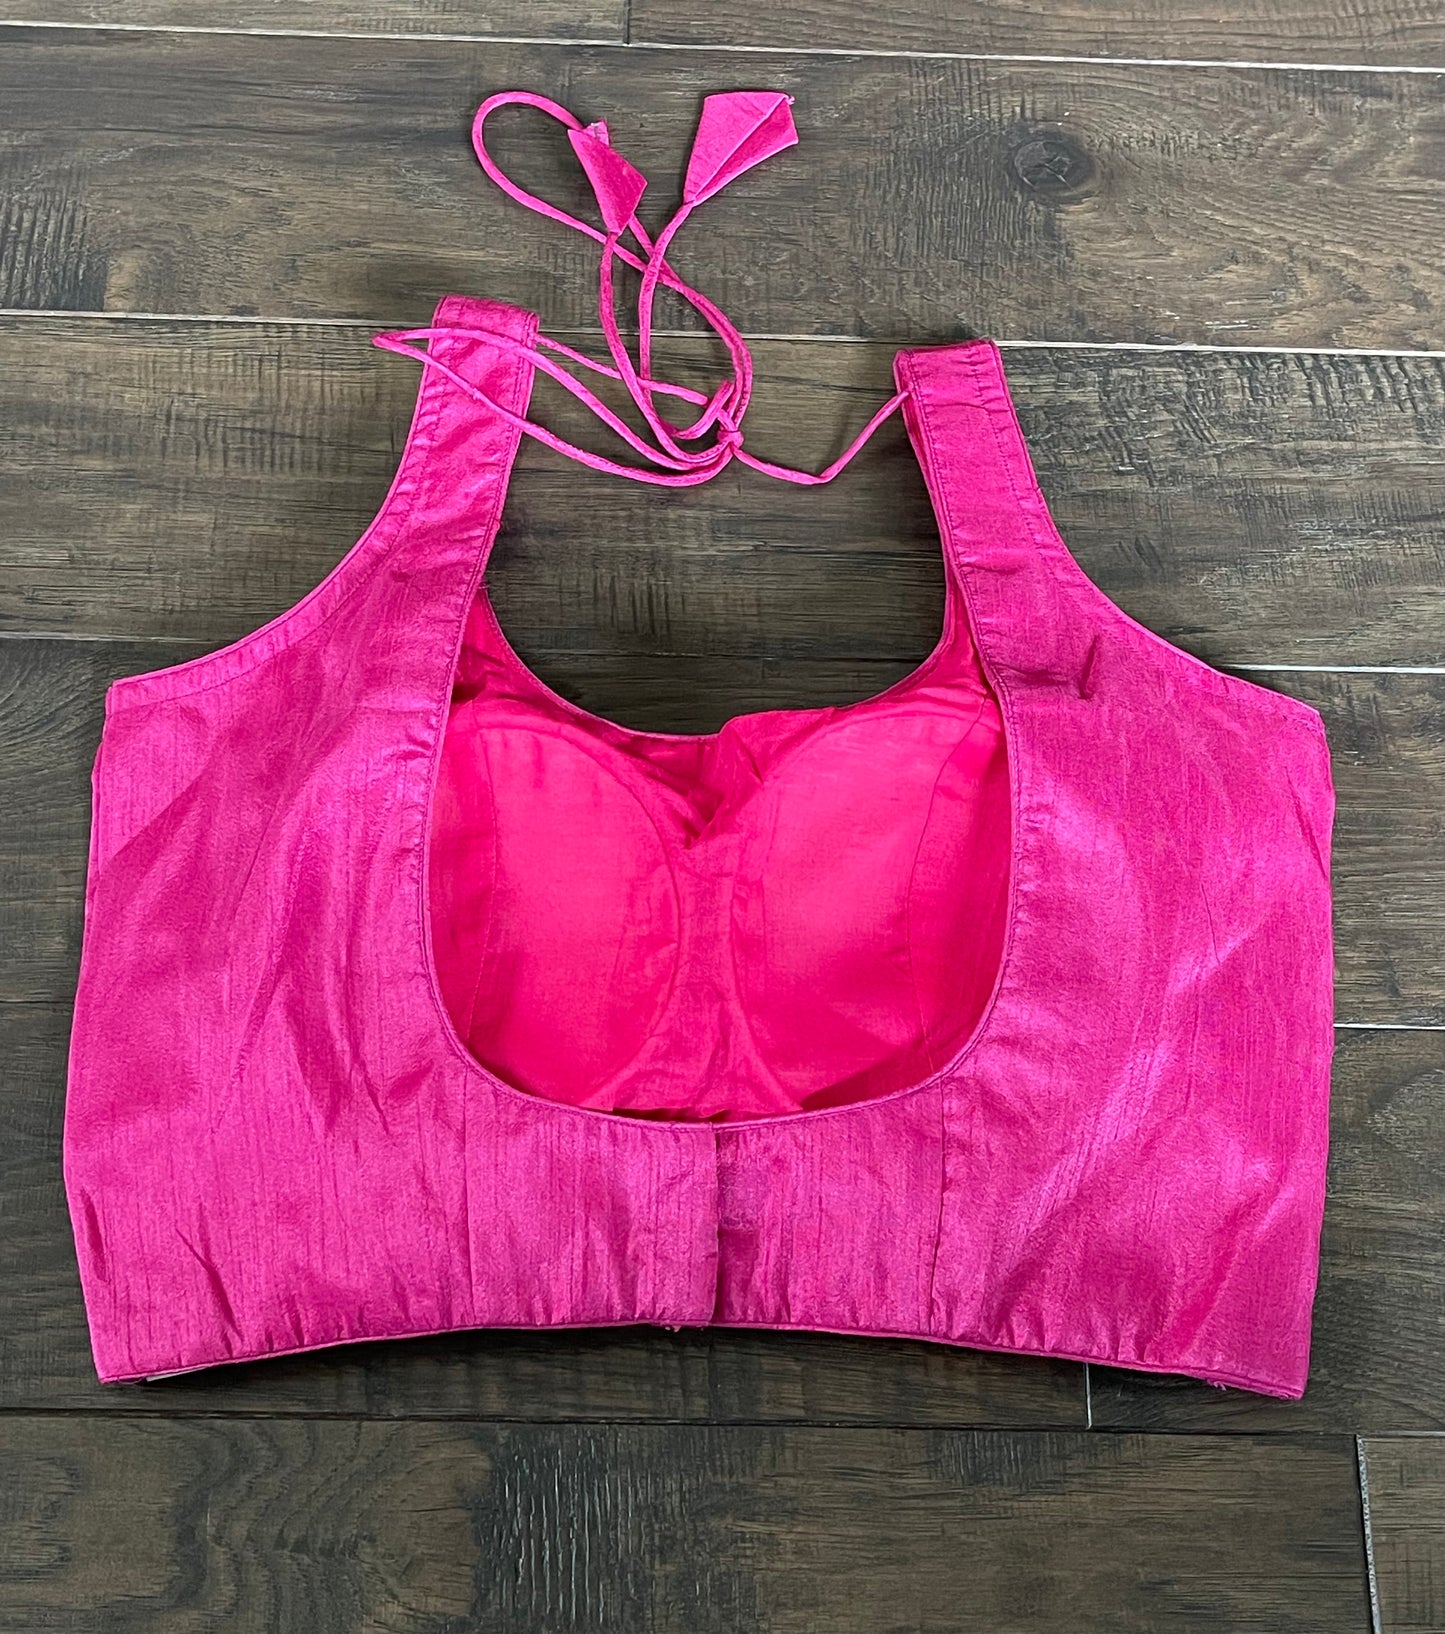 Designer Blouse - Magenta Pink Raw Silk